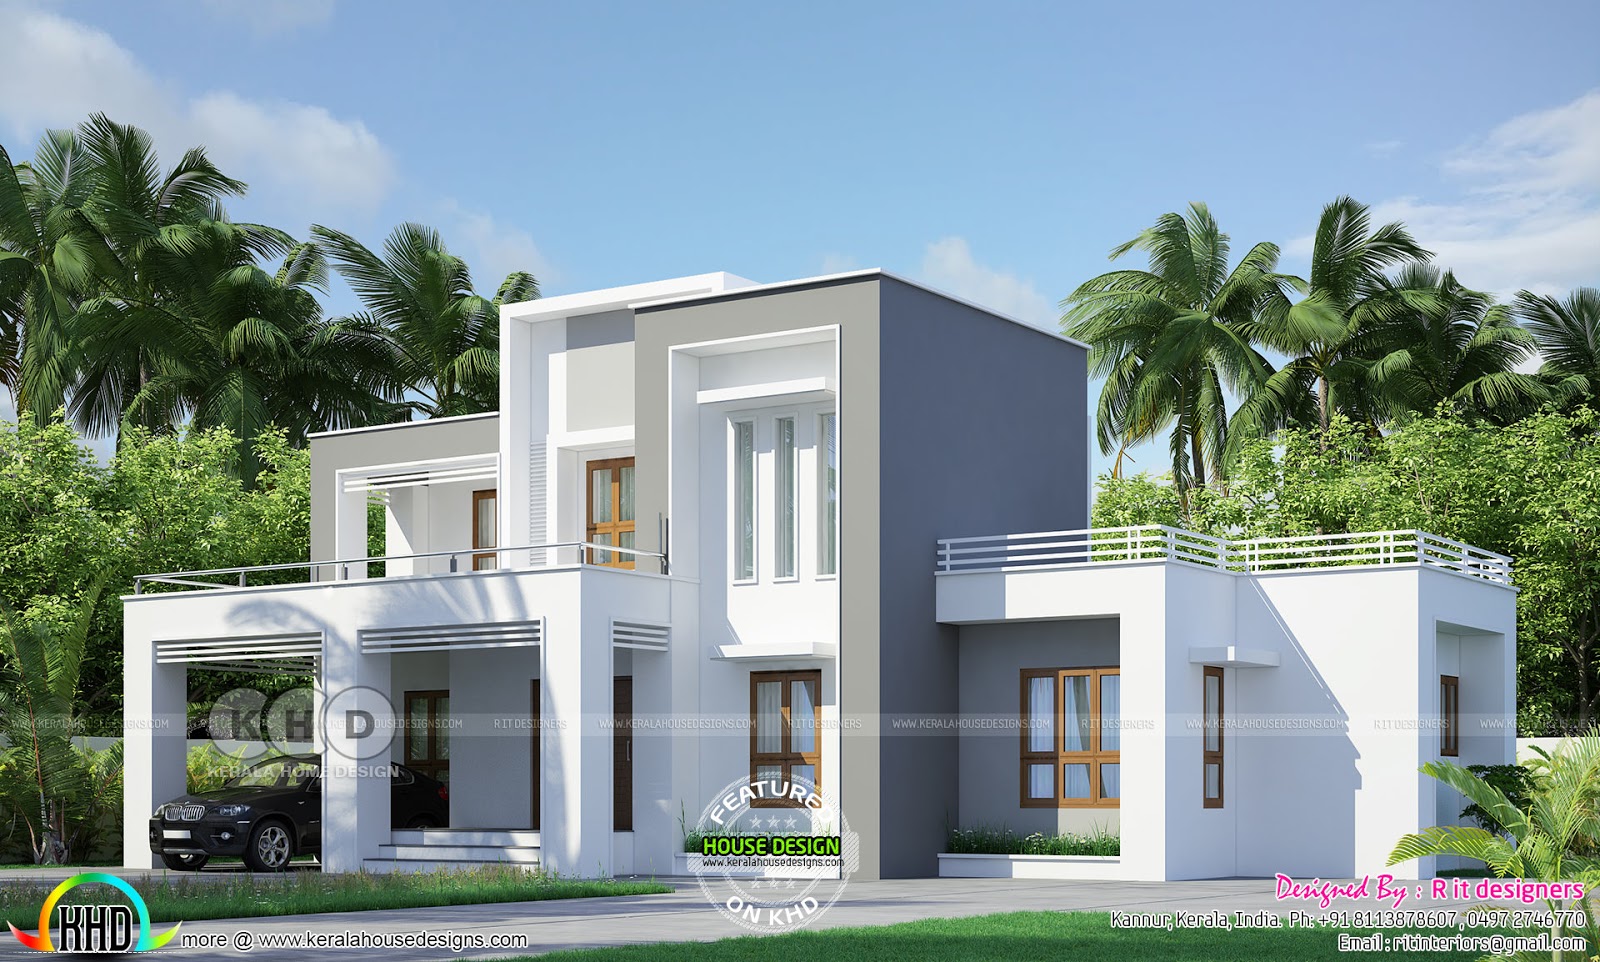 Box model house flat roof style 2431 sq ft Kerala home 